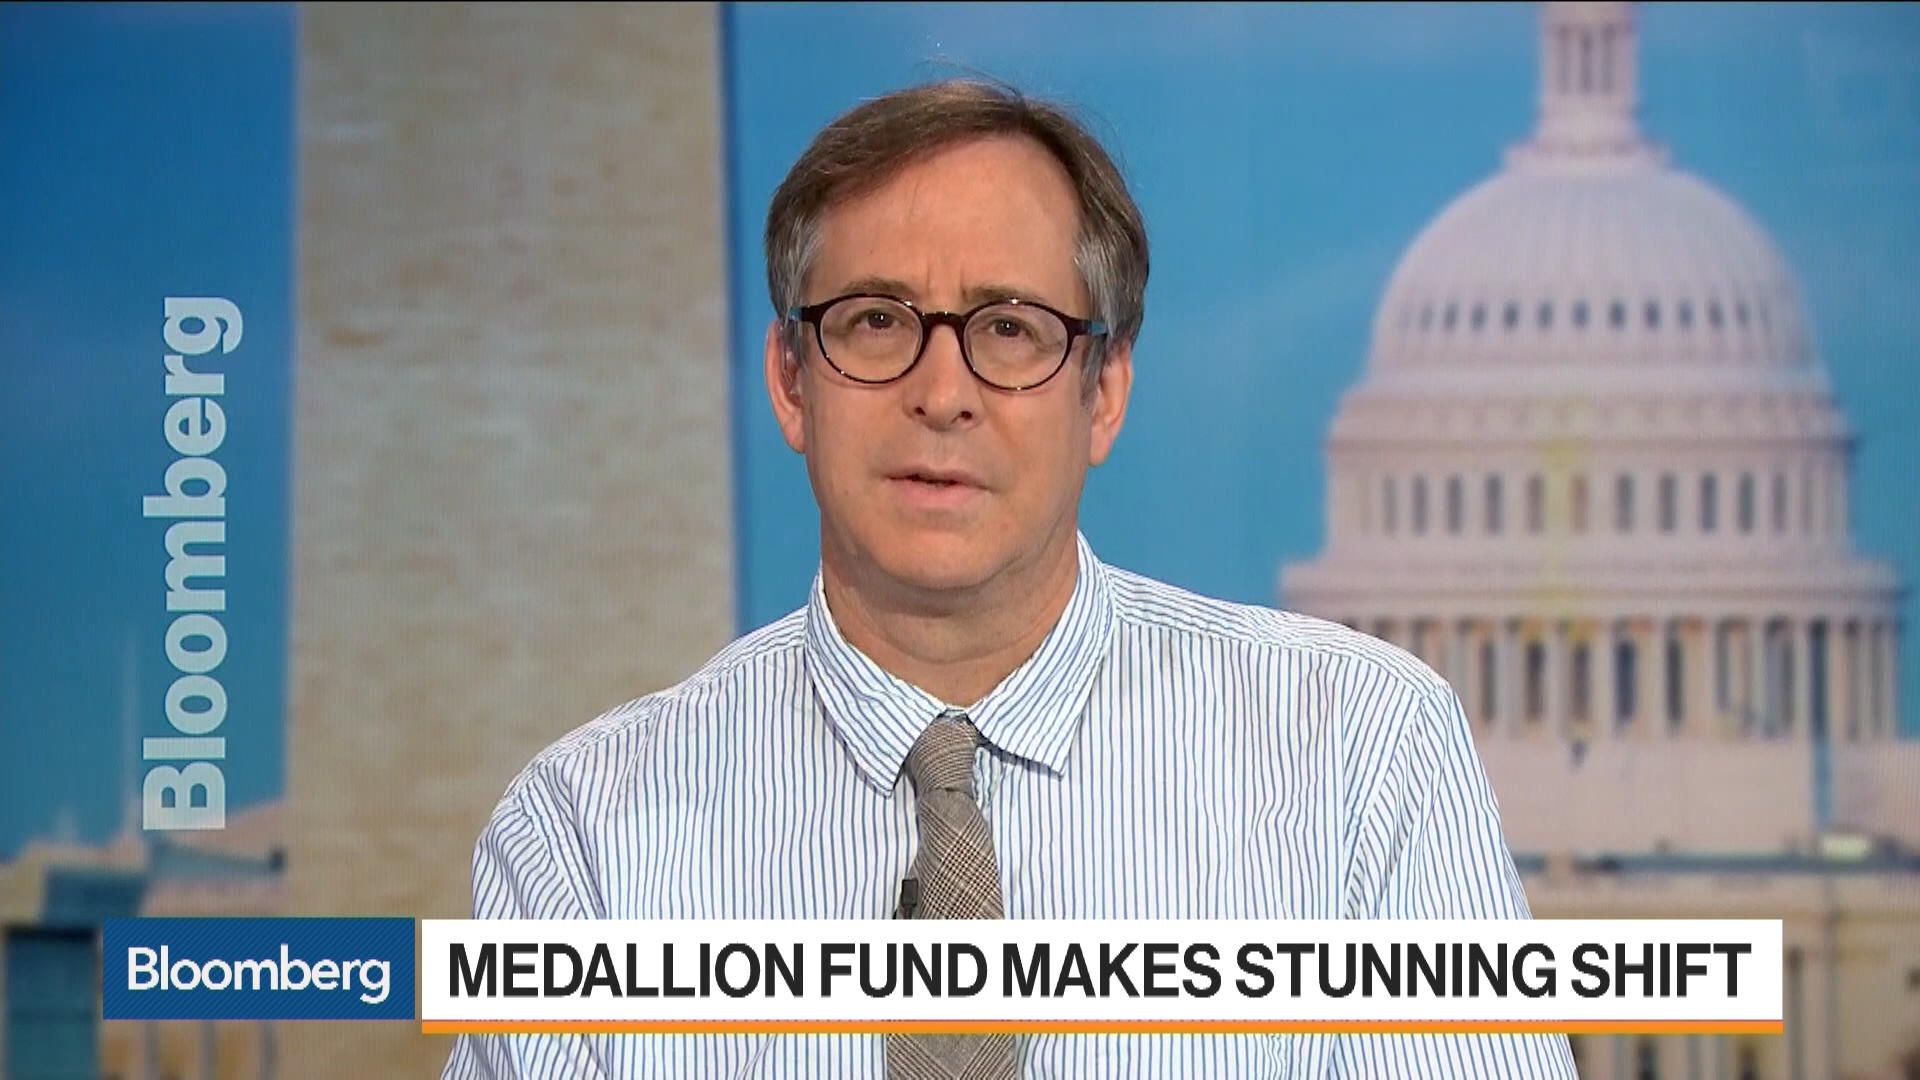 Watch Renaissance's Medallion Fund Makes Stunning Shift Bloomberg